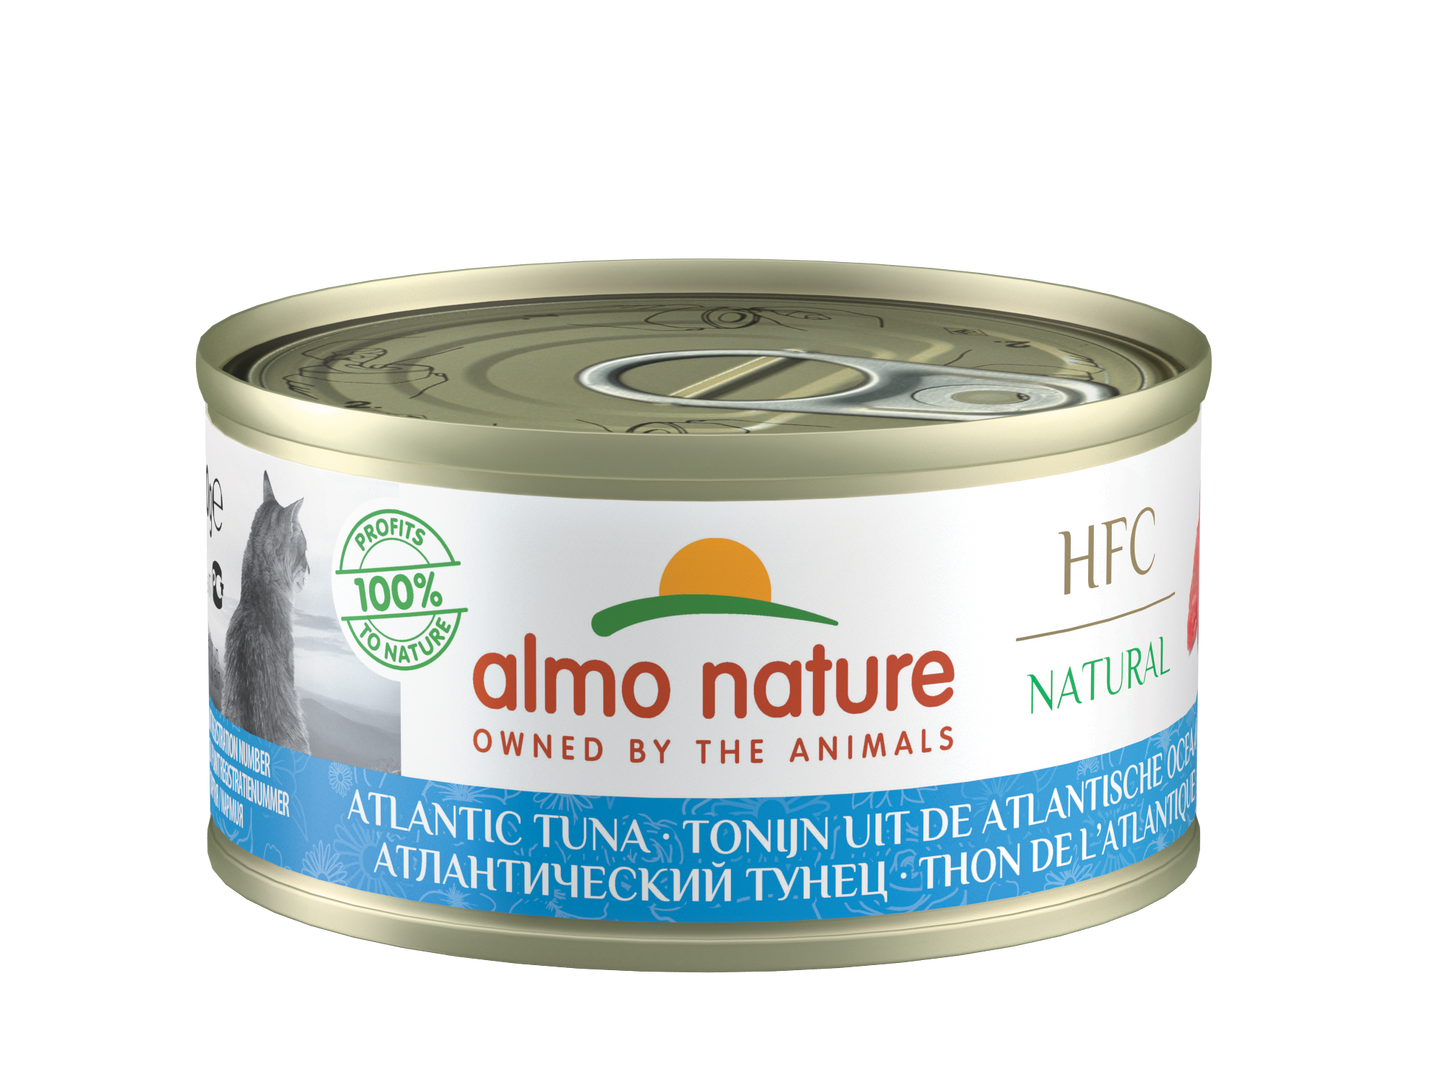 Almo Nature HFC Natural Canned Cat Food – Atlantic Ocean Tuna, 70g